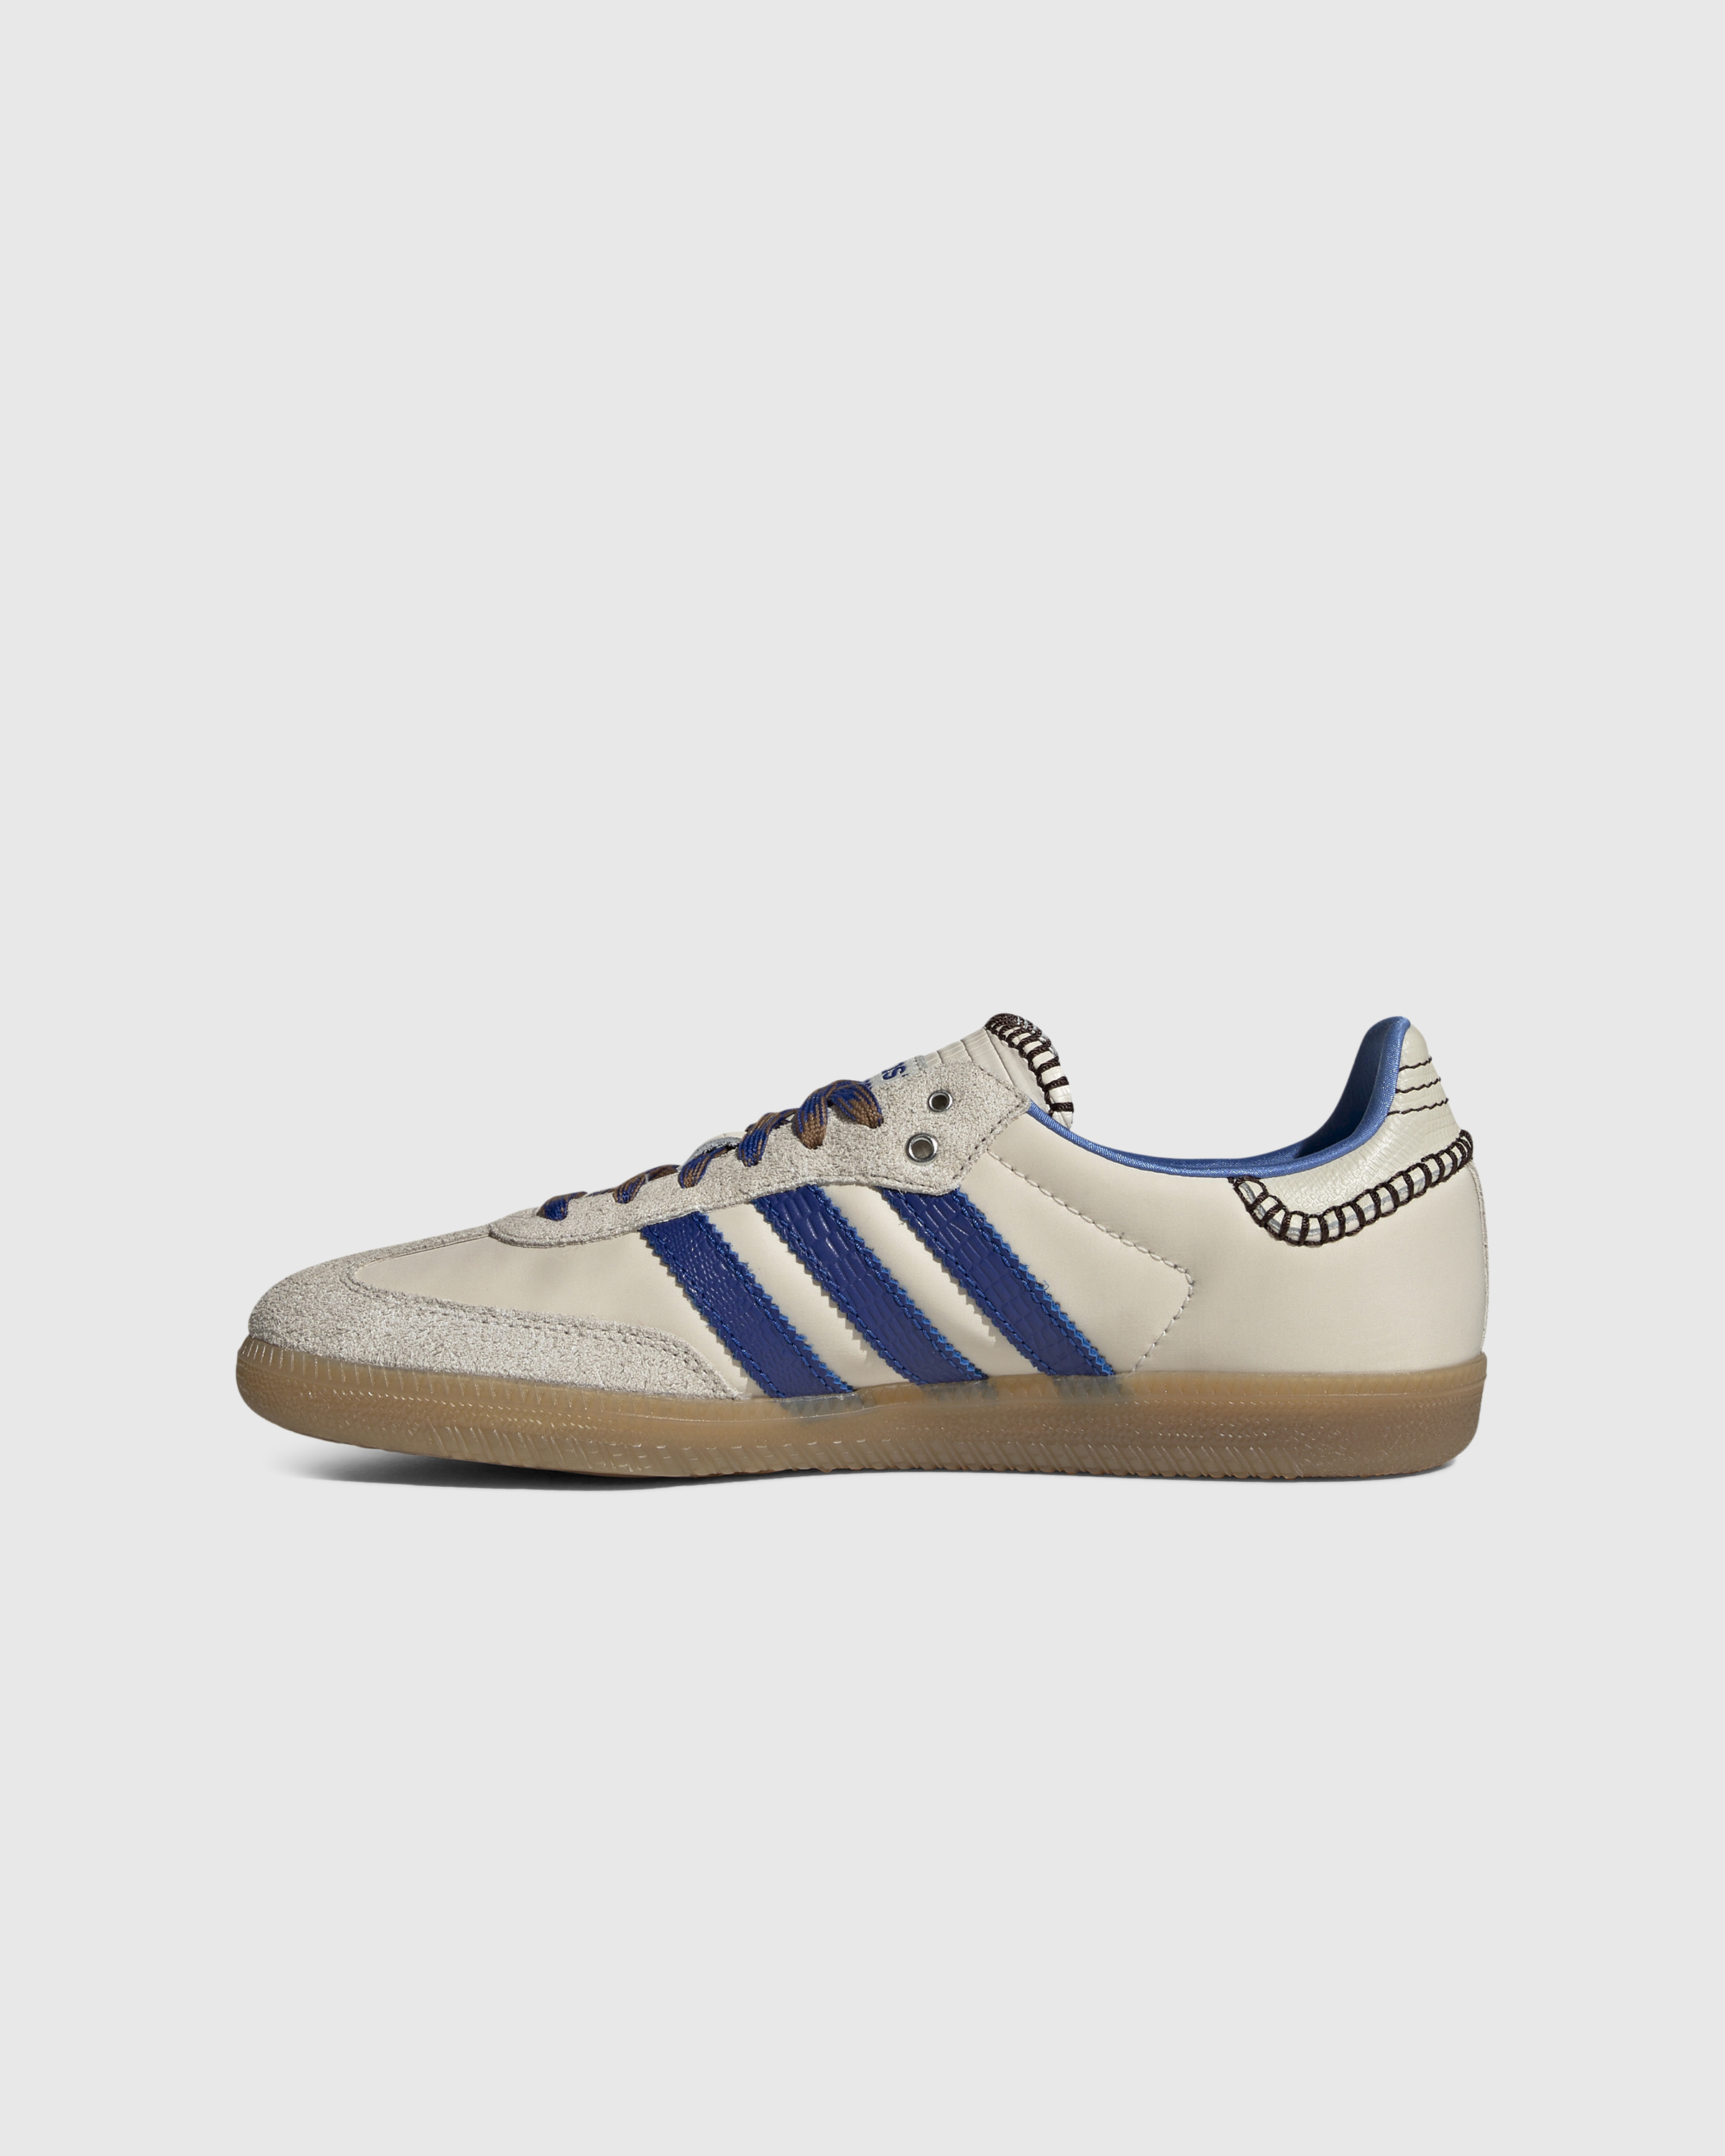 Adidas x Wales Bonner – Samba Cream/Blue - Low Top Sneakers - Beige - Image 2